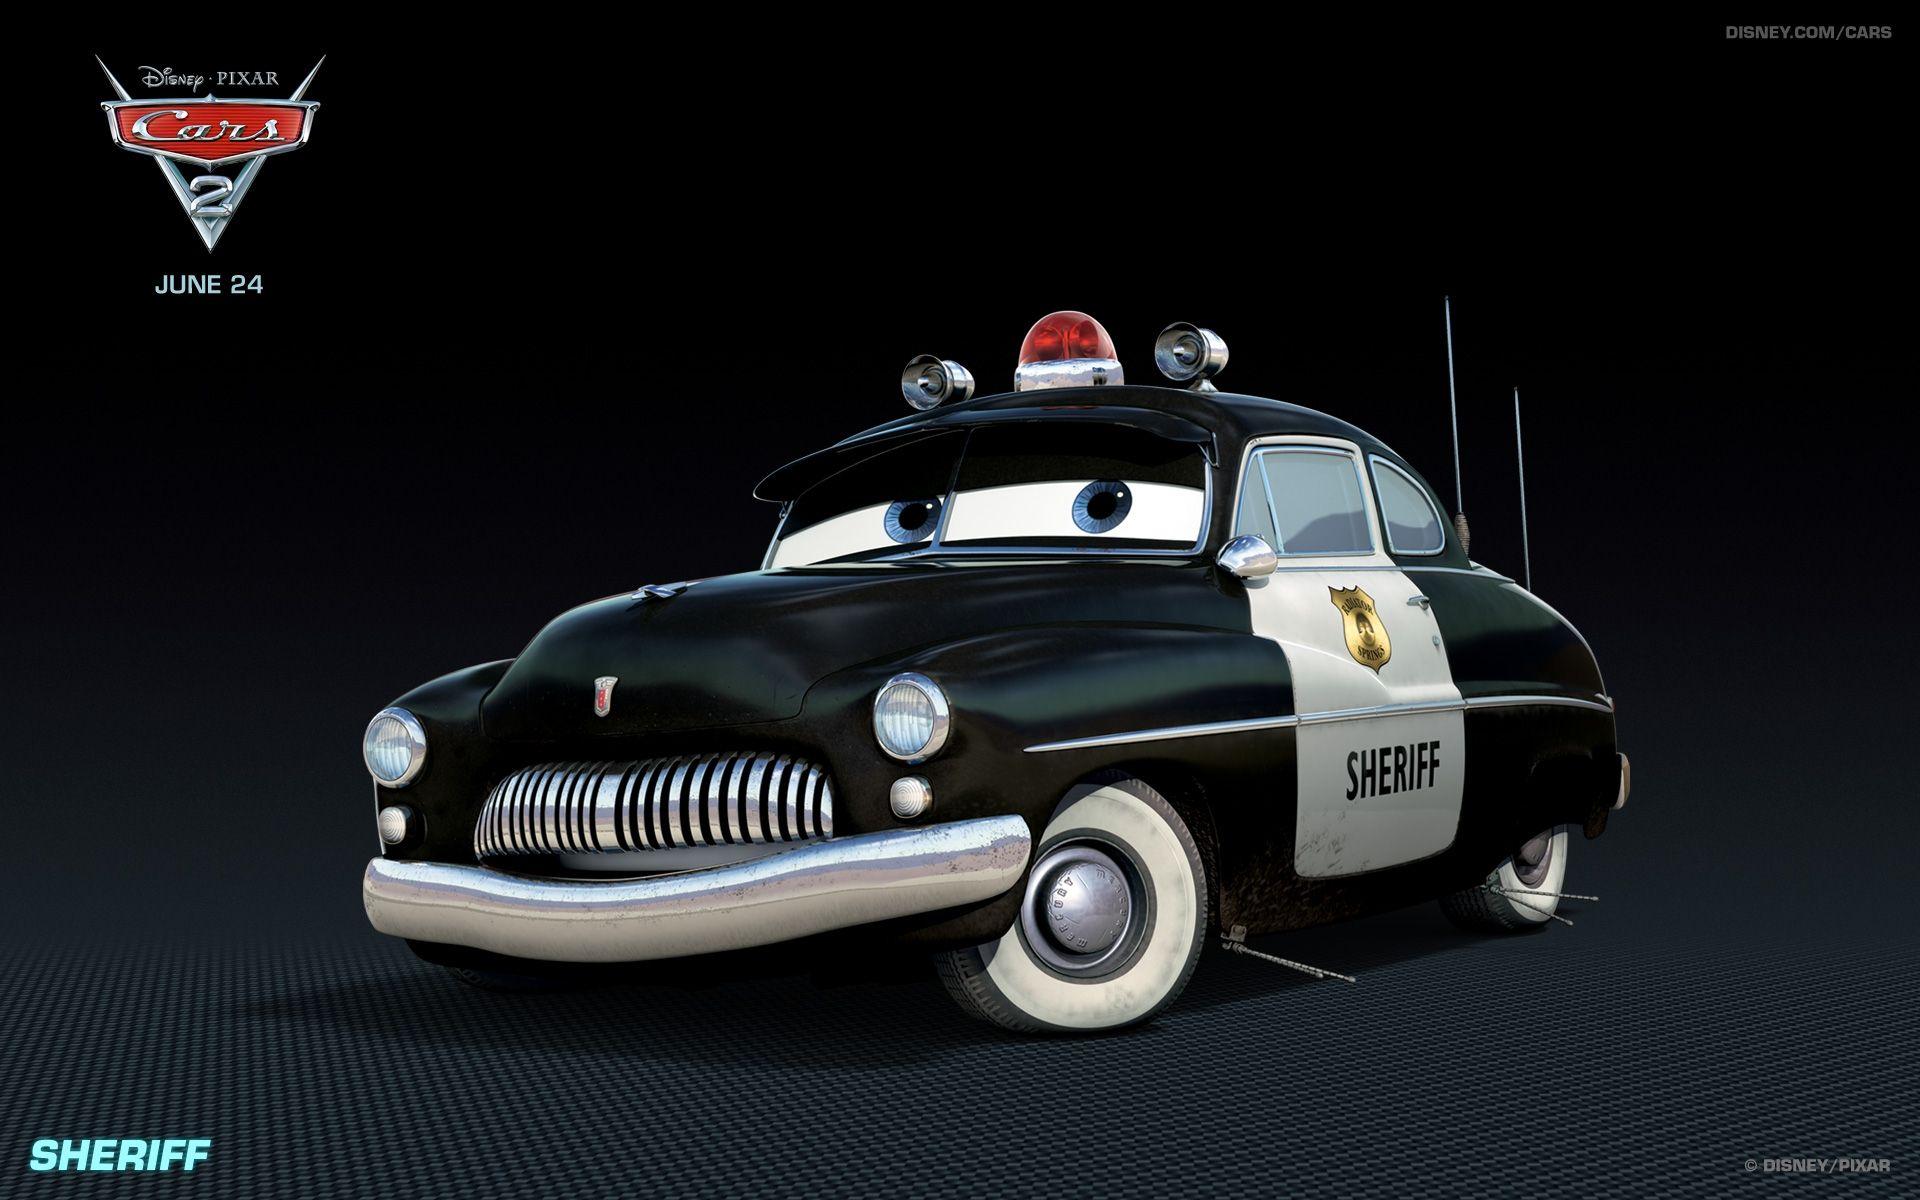 Sheriff Disney Pixar Cars 2 Free HD Wallpaper